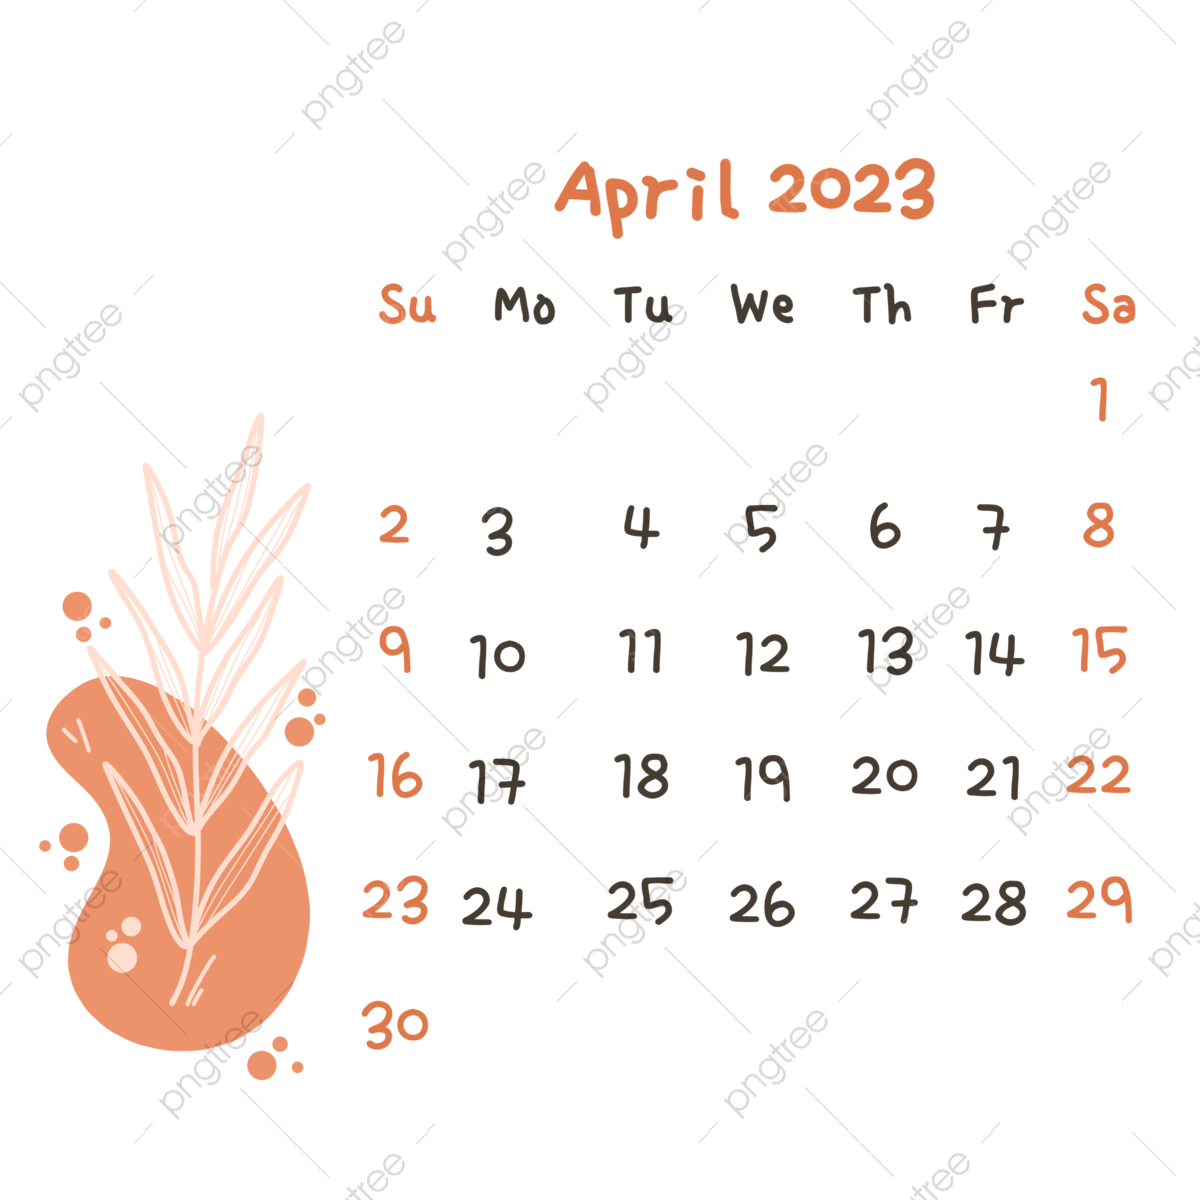  2023 Kalender Hintergrundbild 1200x1200. Calendar April 2023 PNG Image, Download 2023 Aesthetic Calendar April, April, Calendar Aesthetic Calendar PNG Image For Free Download